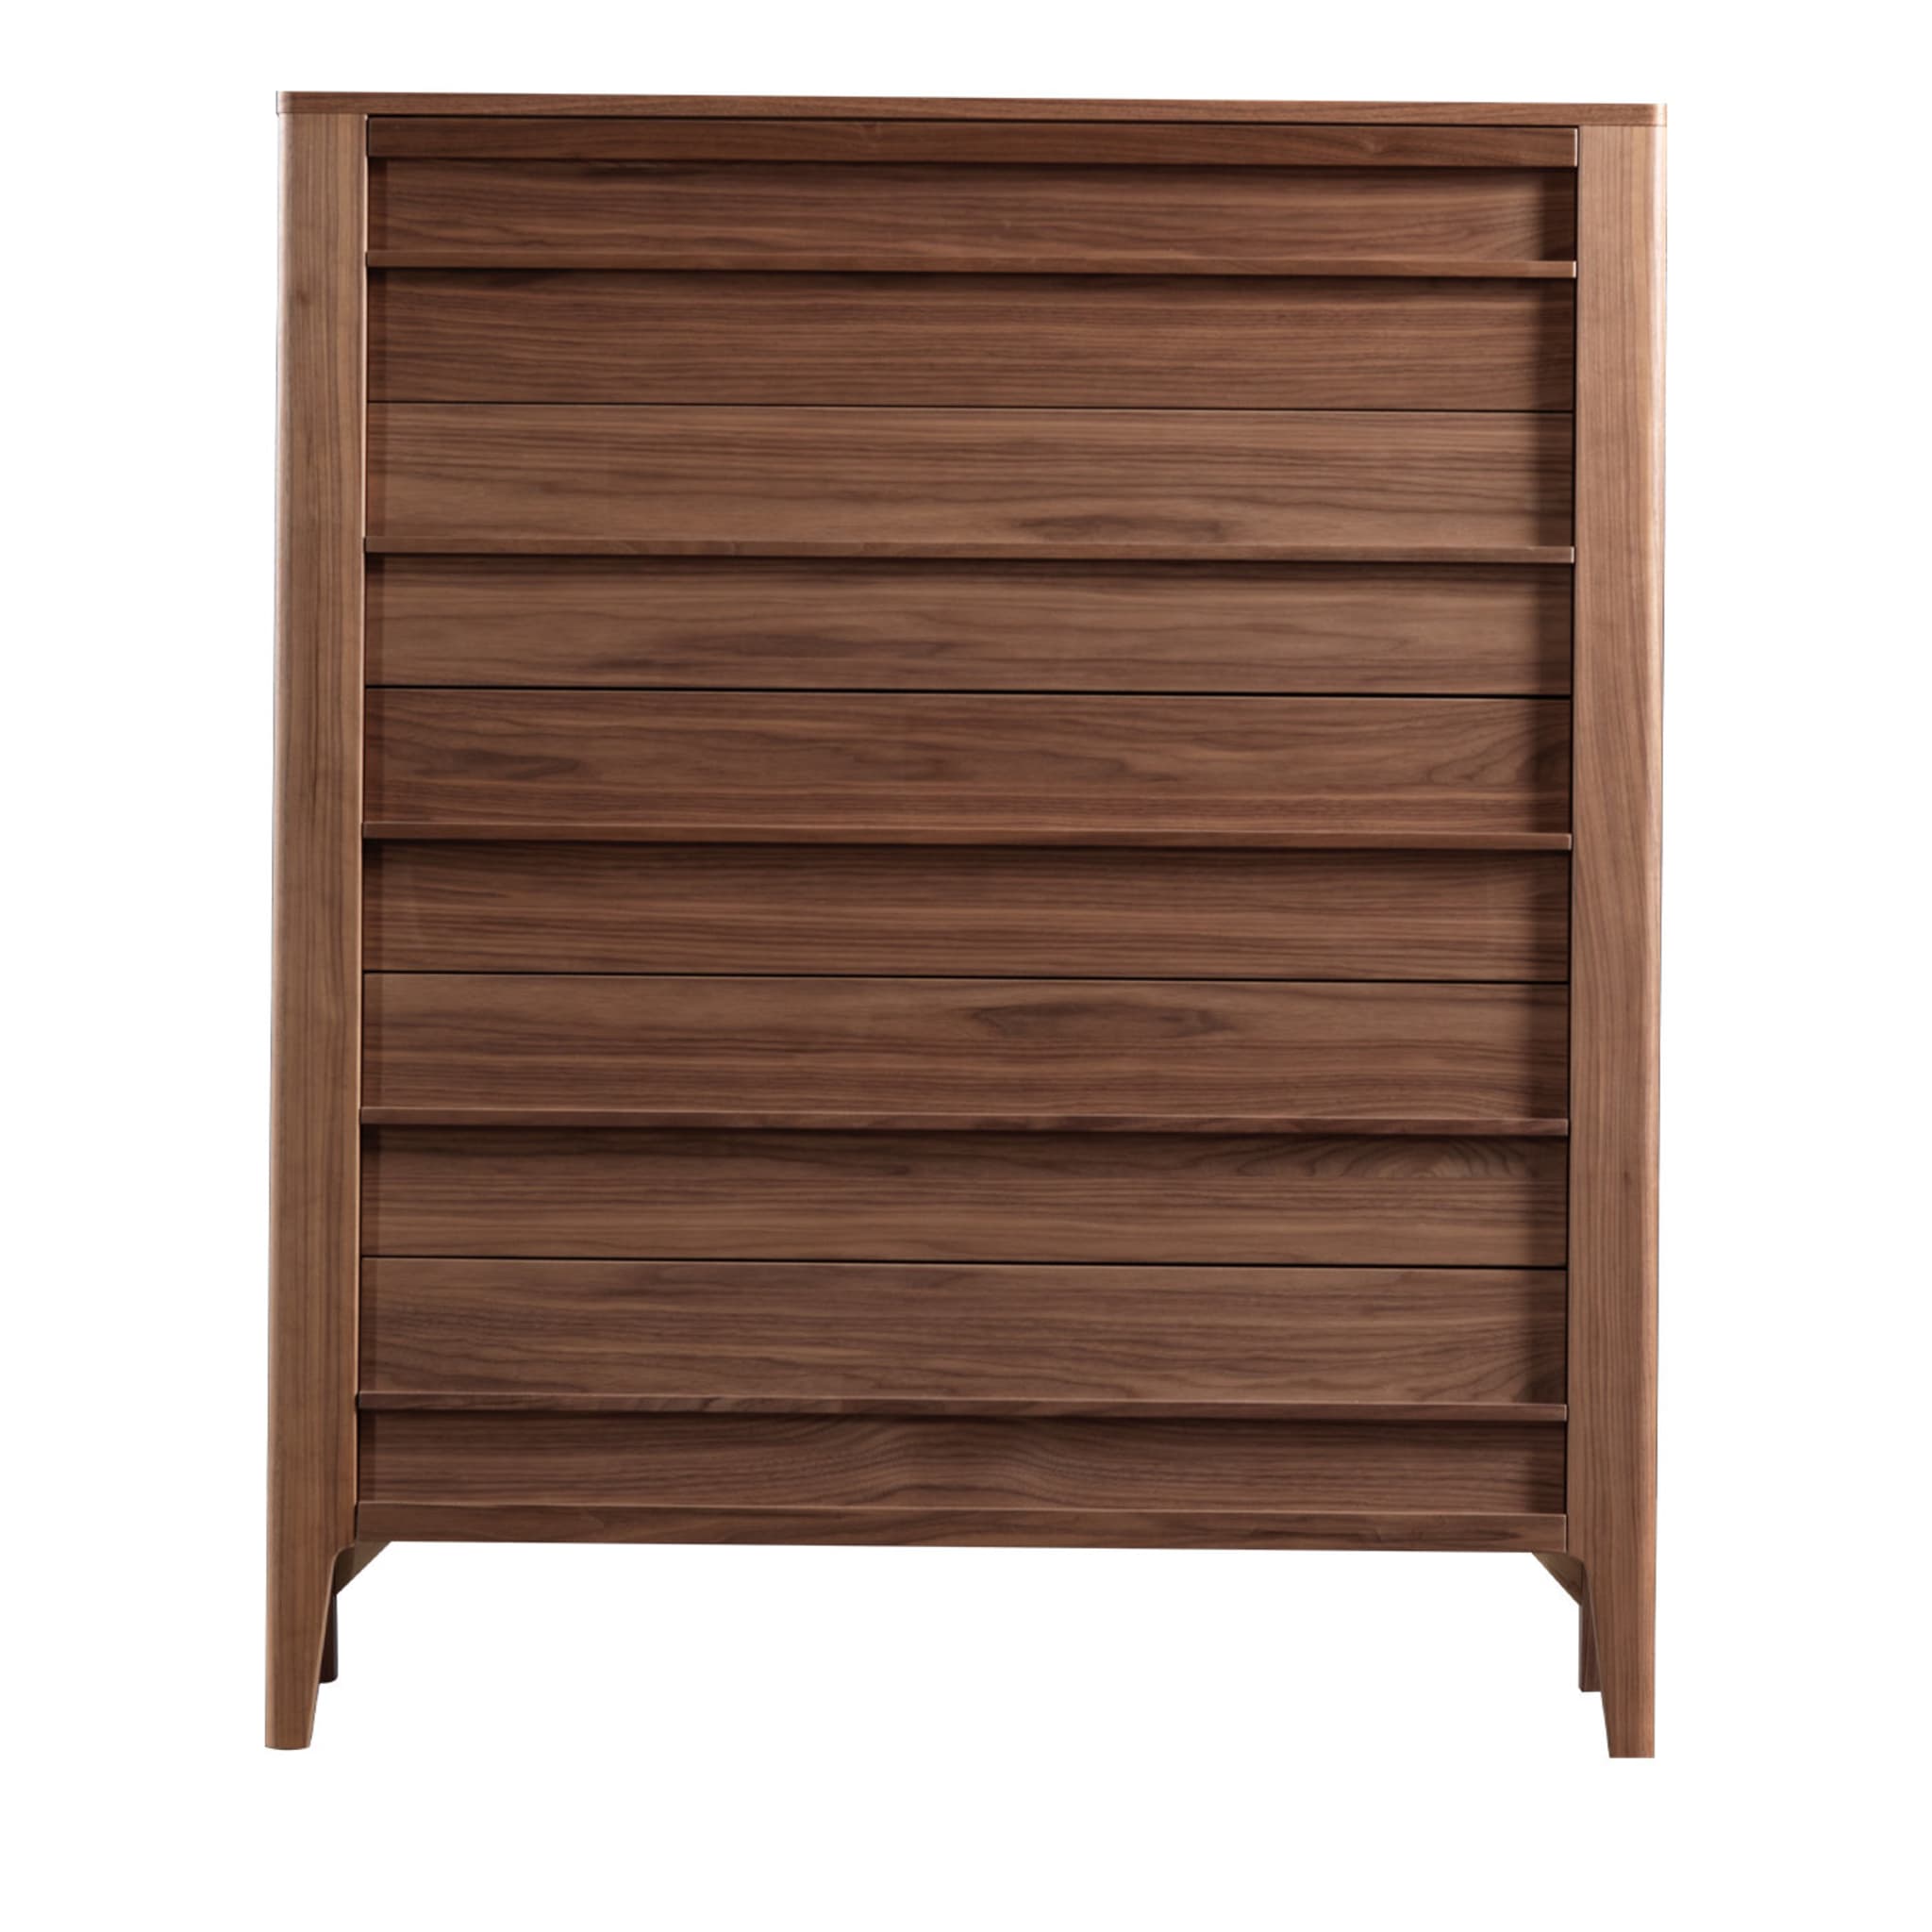 Five-Drawer Walnut Wood Dresser Modo10 Collection - Main view